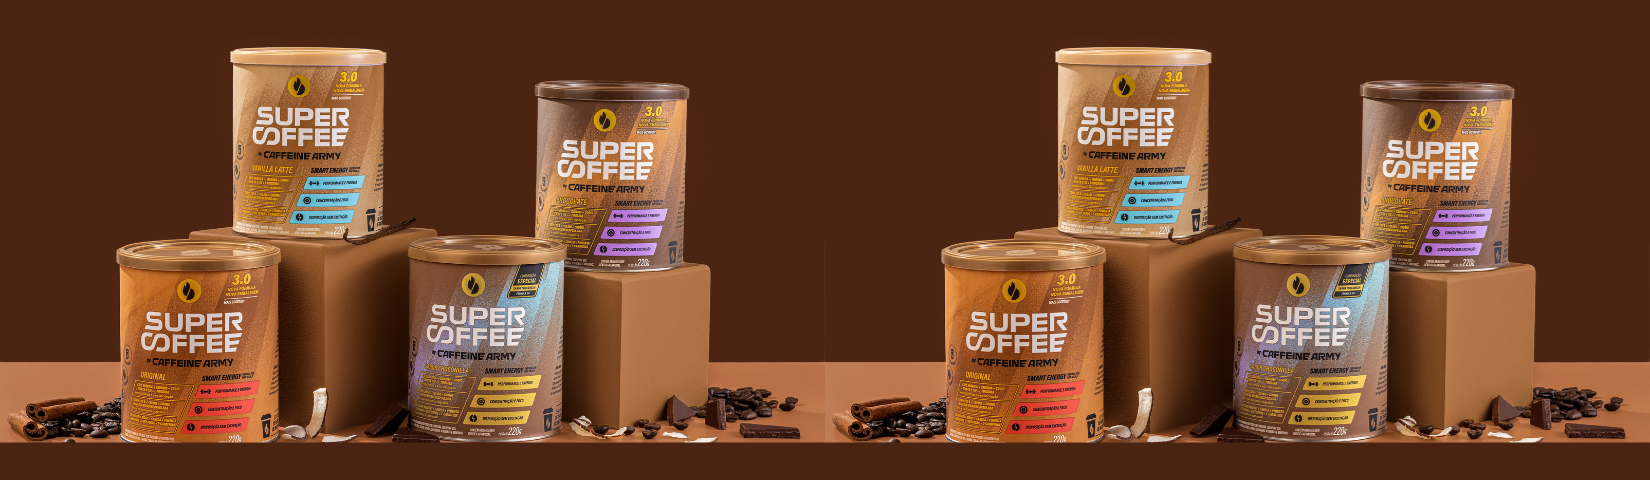 supercoffe